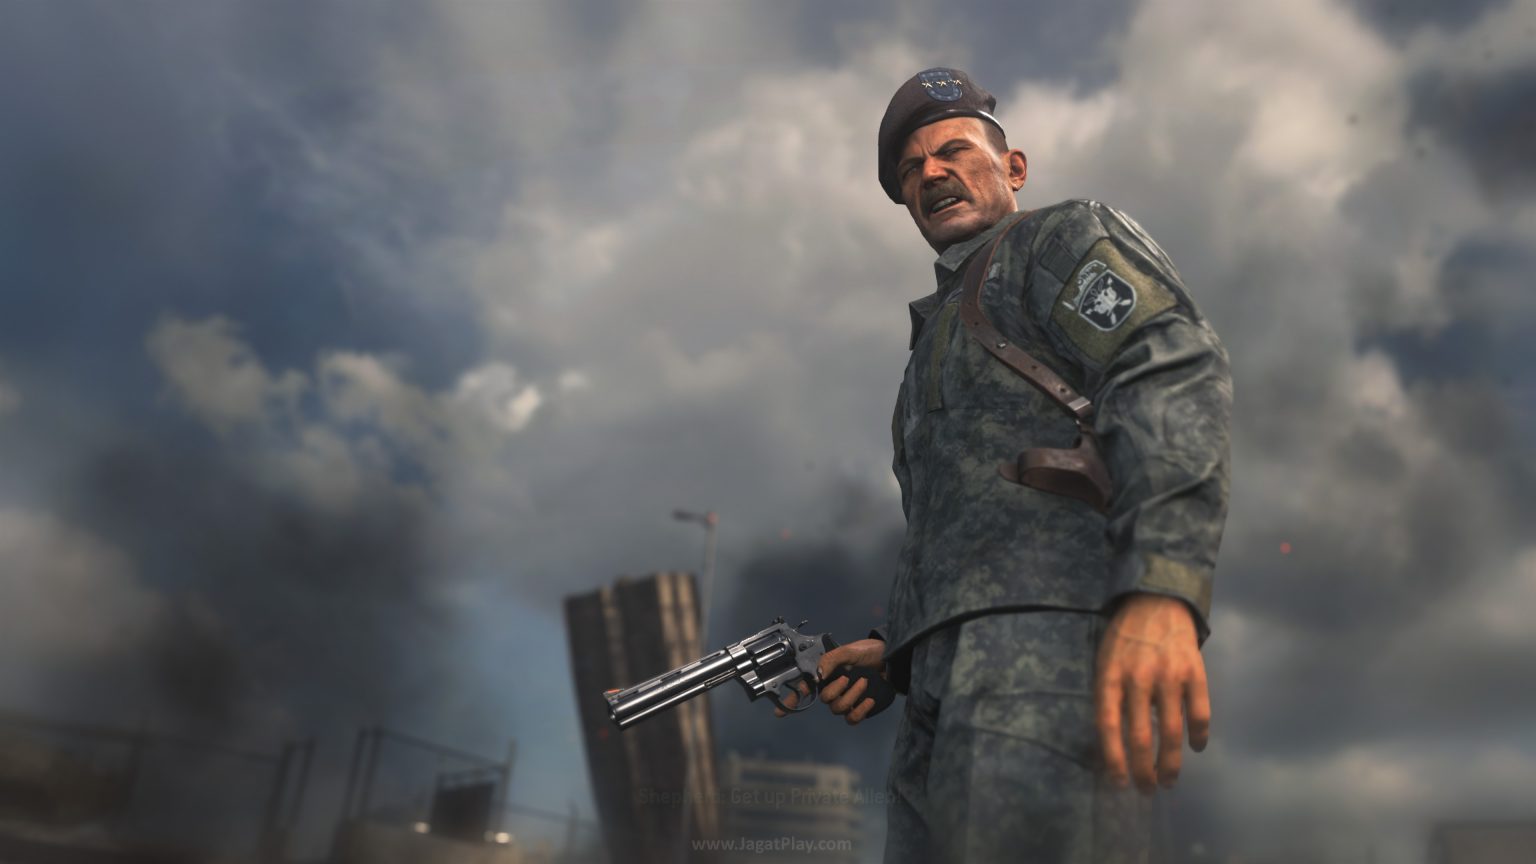 Модерн варфаре ремастеред. Cod mw2 Remastered. Шепард Call of Duty Modern Warfare 2 Remastered. Call of Duty mw2. Call of Duty Modern Warfare 2 ремастеры.